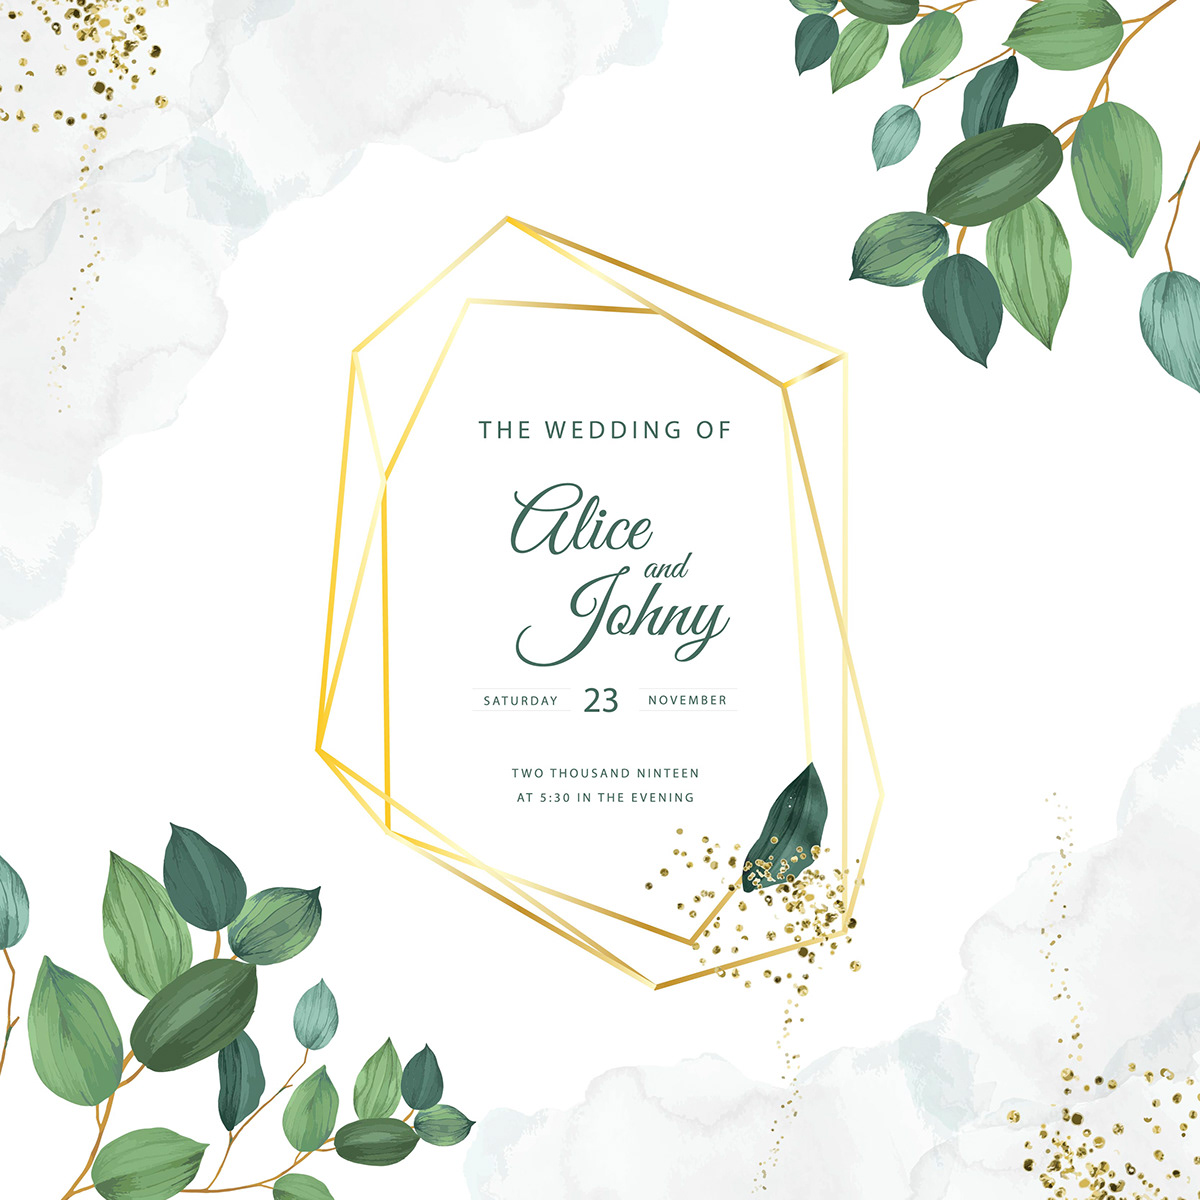 FLORAL GOLDEN INVITATION garden geometric Glitter golden greenly wedding cards wedding wedding invitation